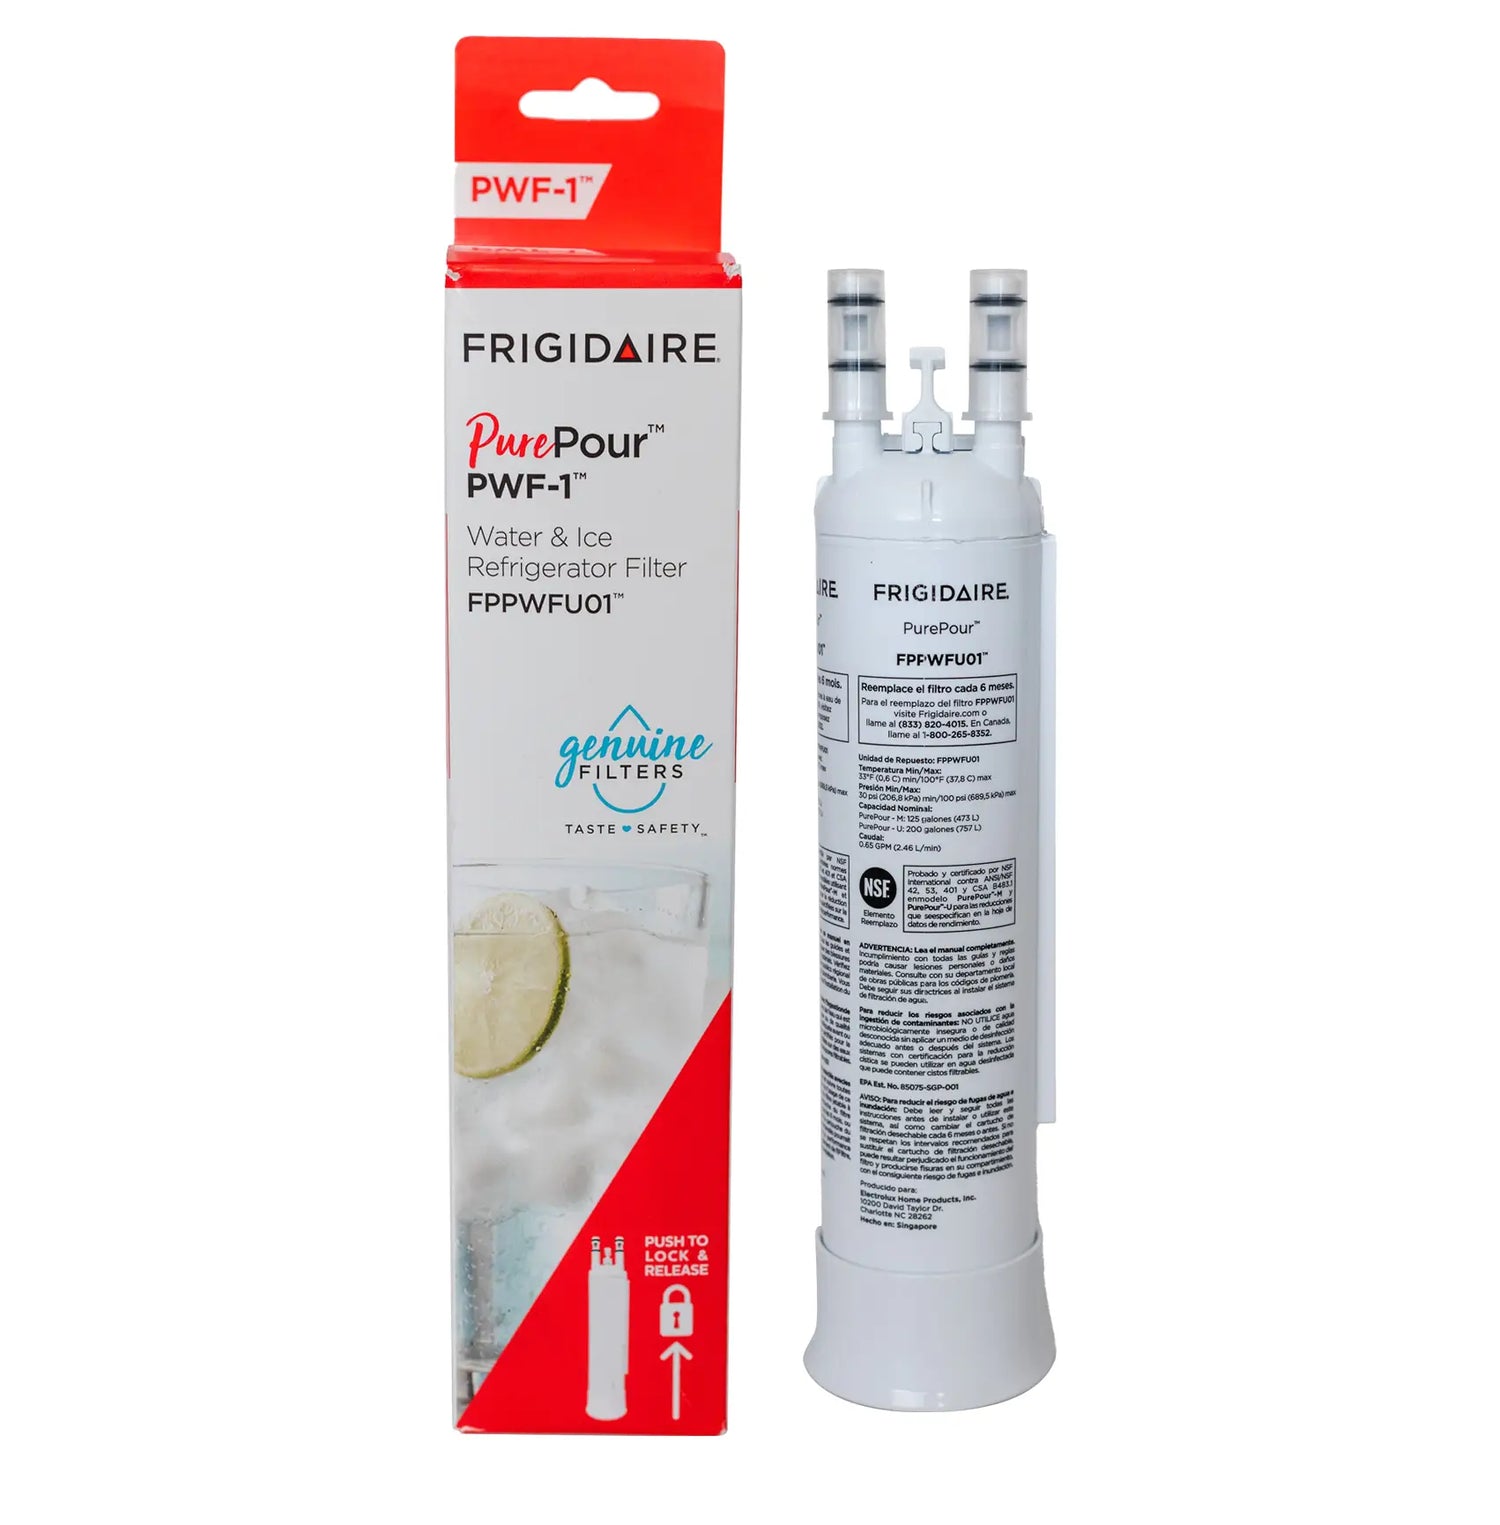 Frigidaire FPPWFU01 PurePour PWF-1 Refrigerator Water Filter